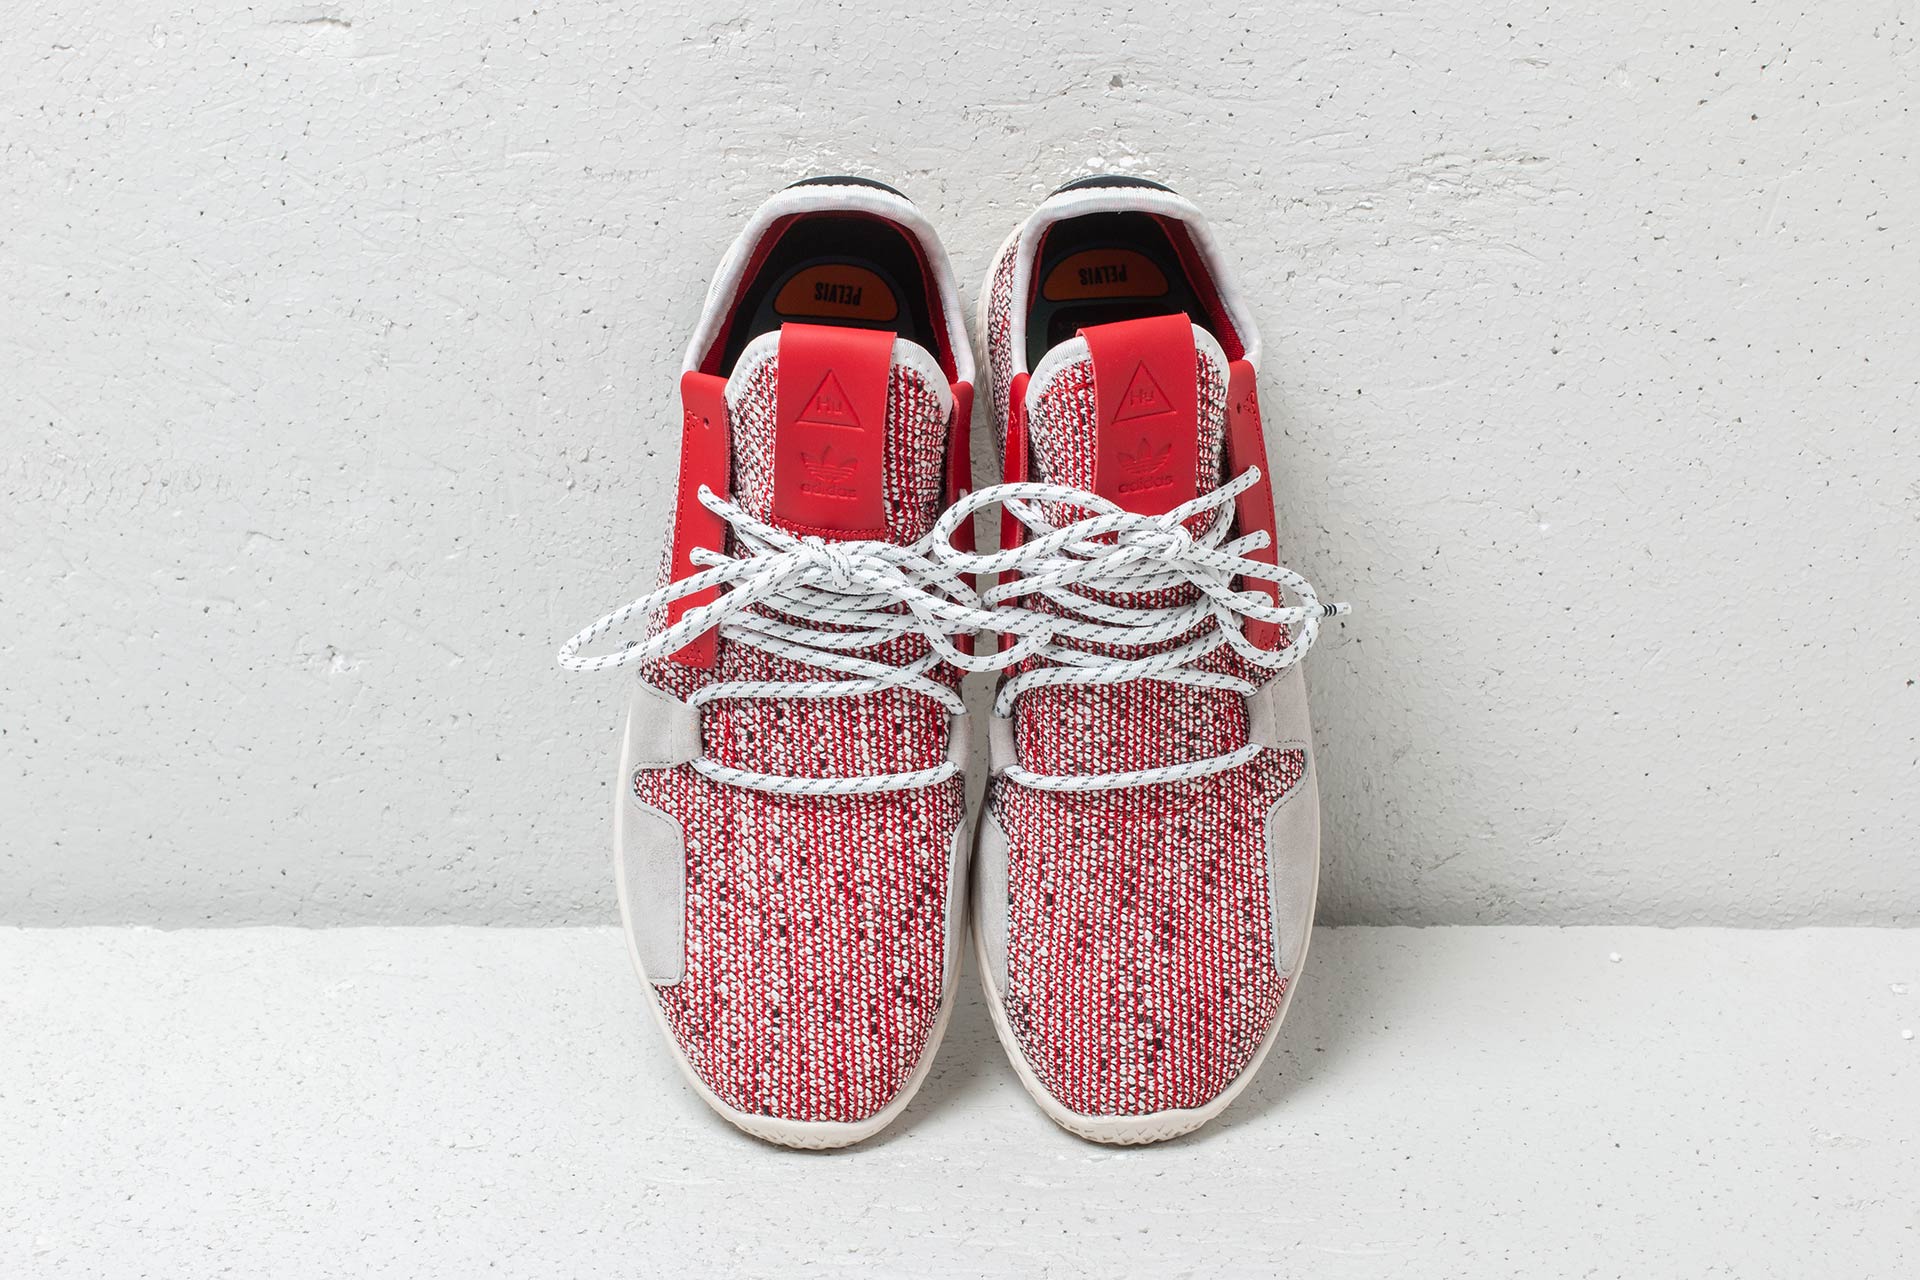 Adidas Tennis Hu V2 Pharrell Williams Shoes Size 11 Scarlet Red BB9542 